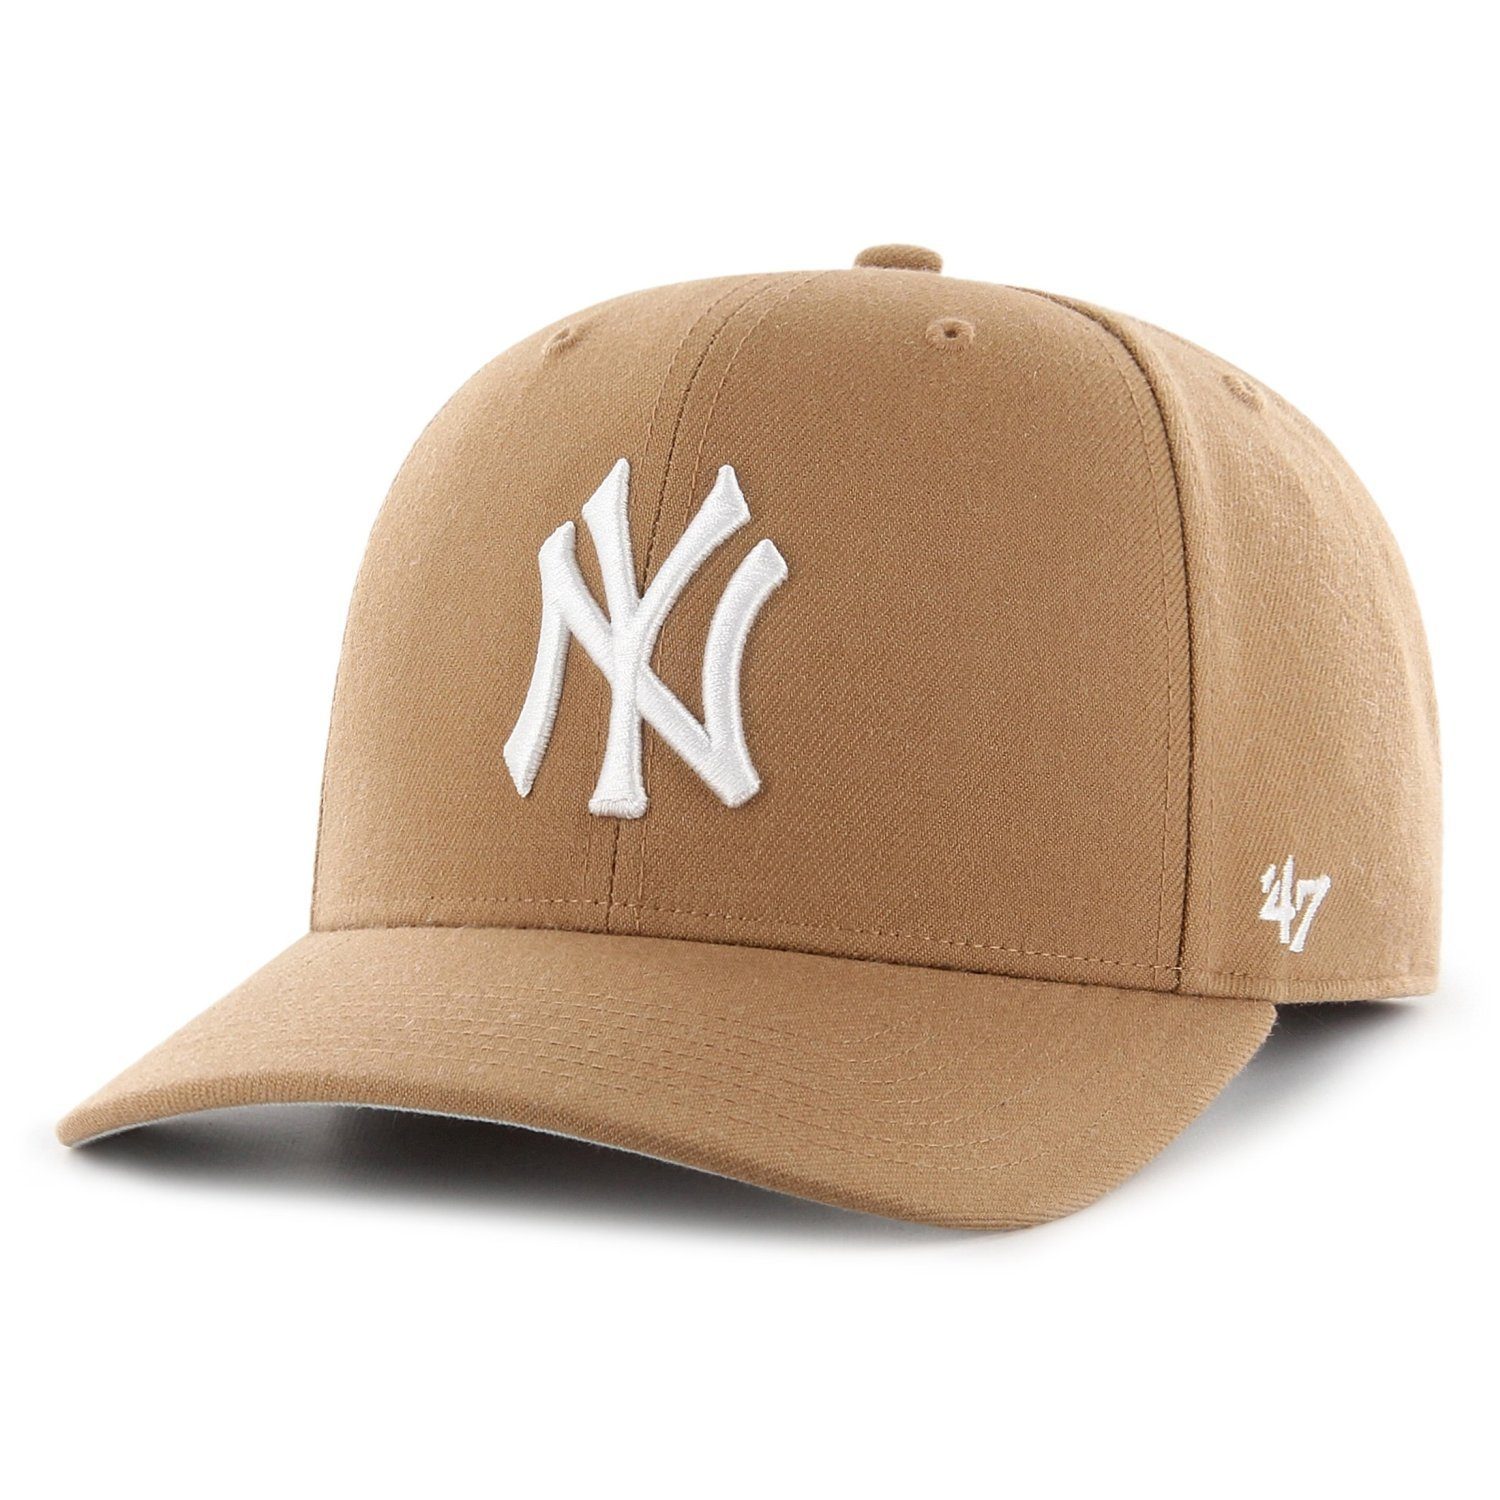 '47 Brand Snapback Cap Low Profile ZONE New York Yankees